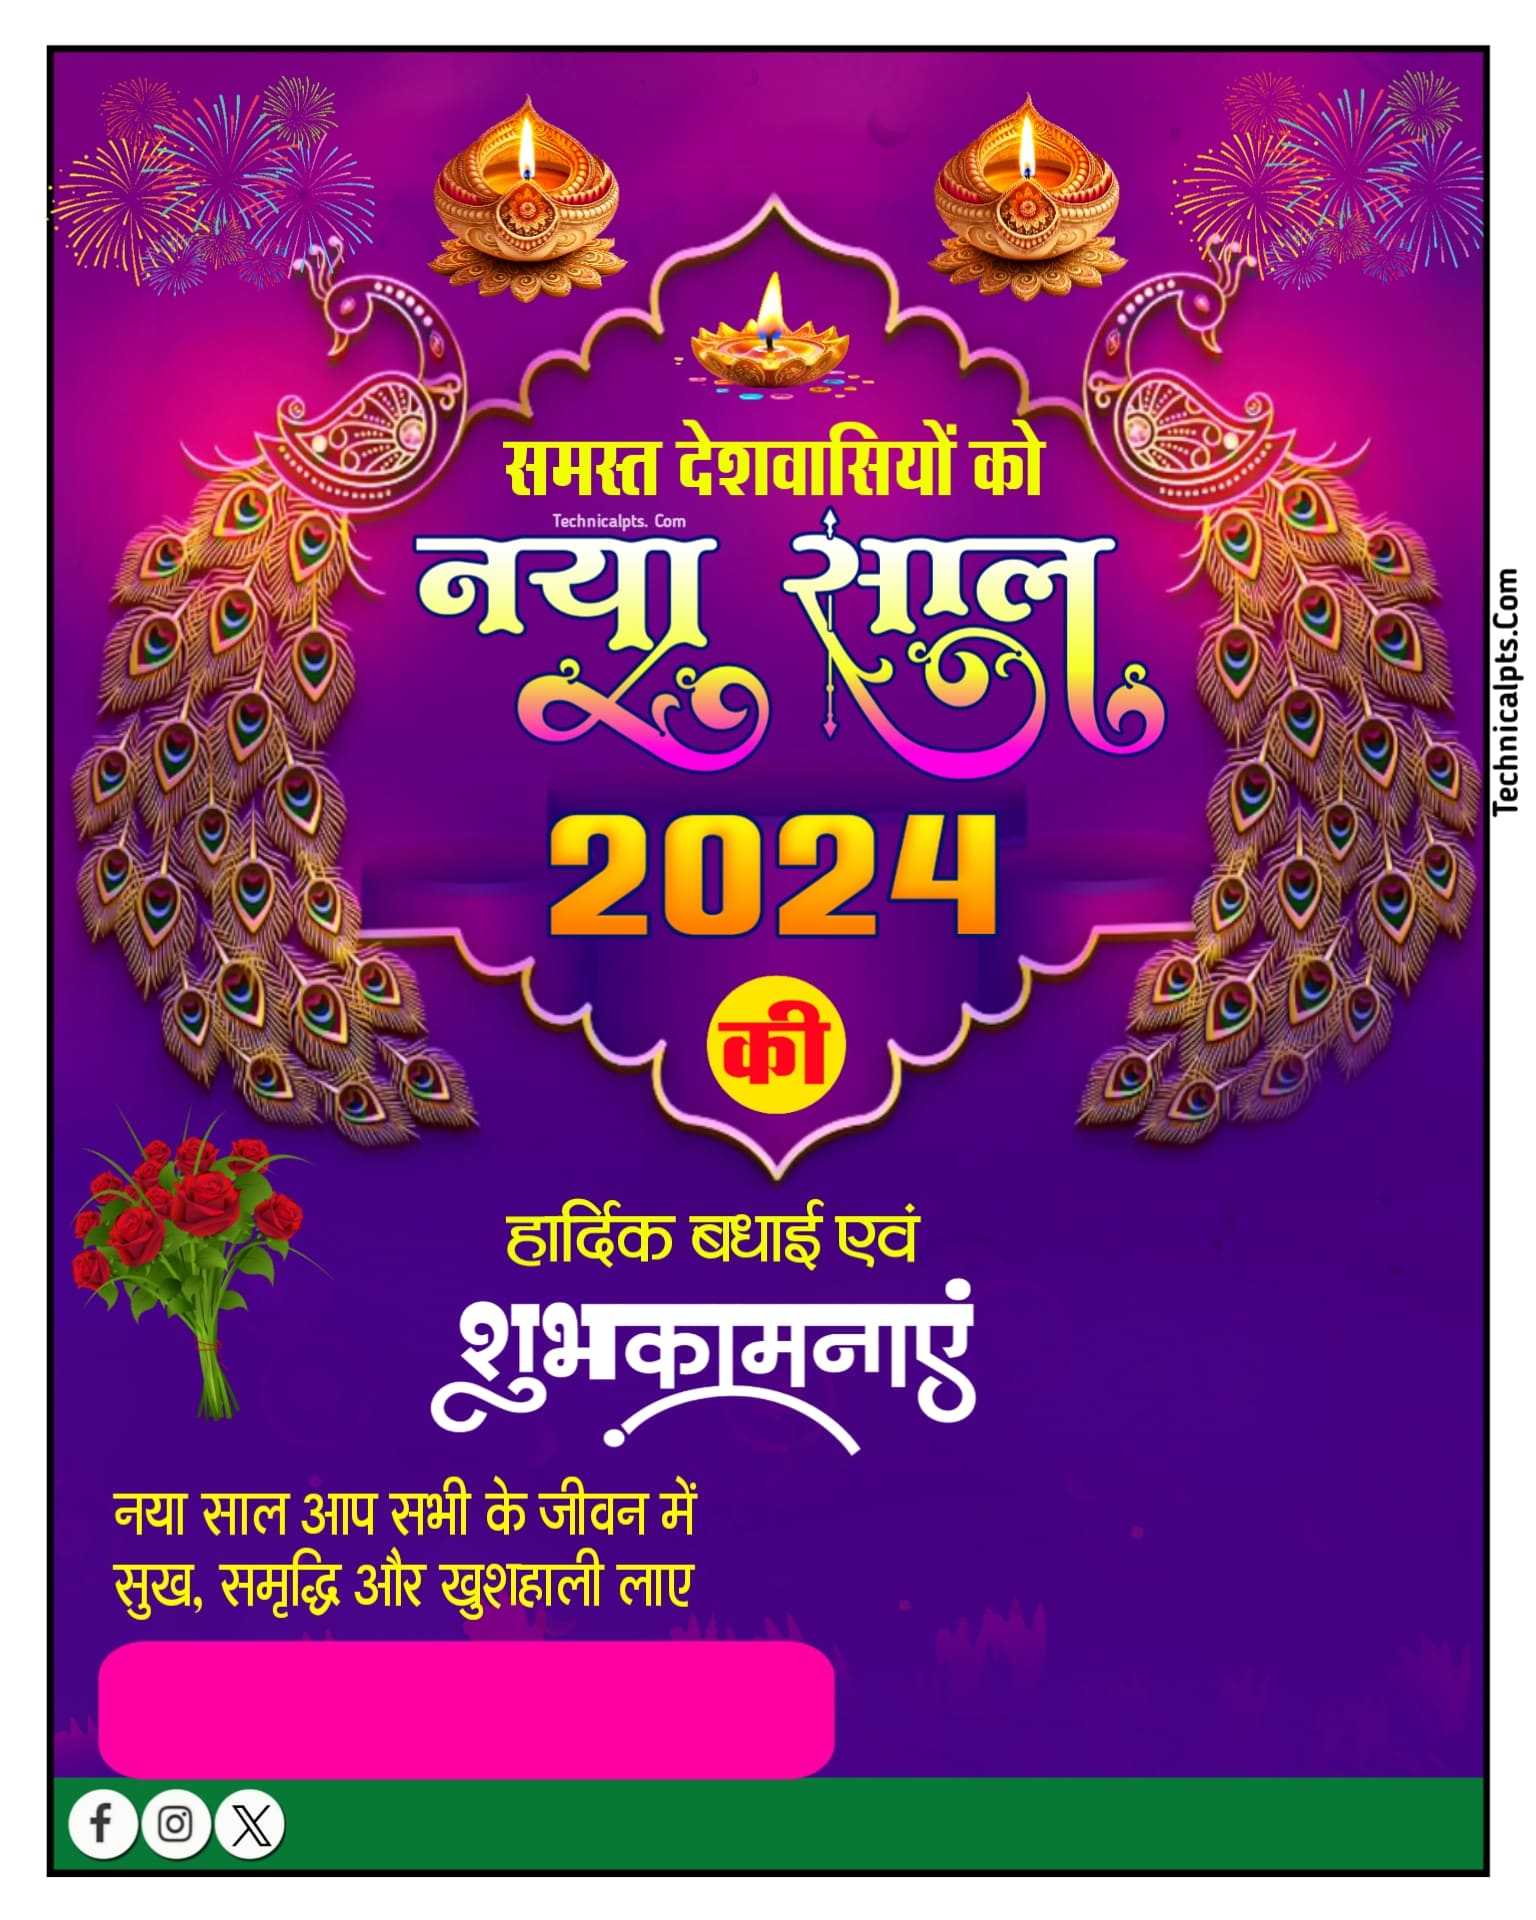 Naya Sal 2024 poster banaen mobile se| Happy new year 2024 banner editing plp file| mobile se Naye Sal Ka poster Kaise banaen